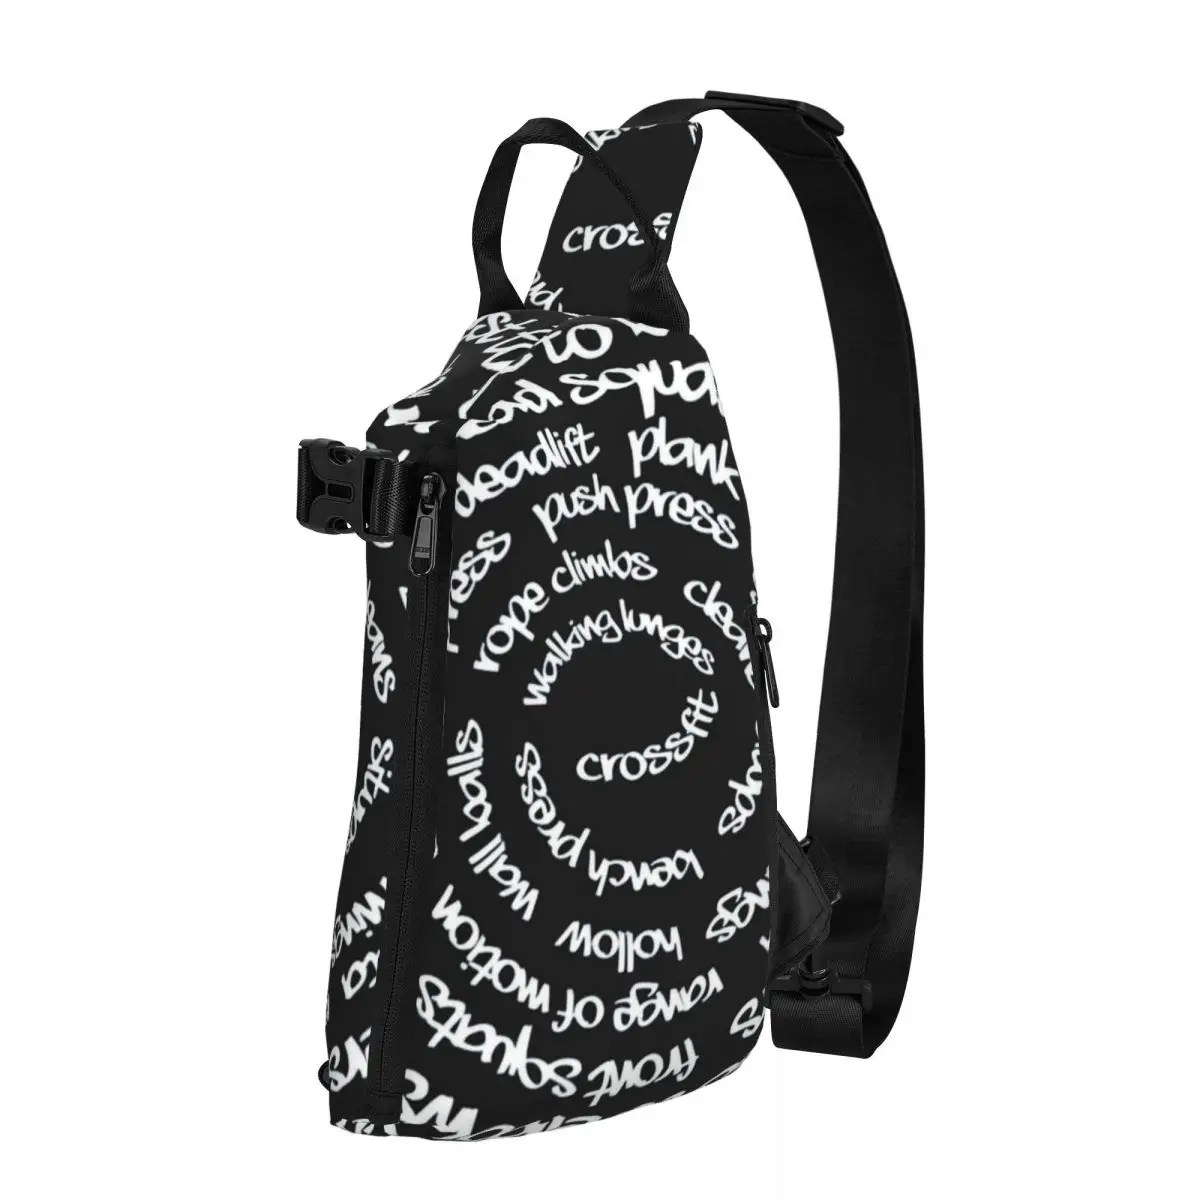 Crossfit Spiral Words Shoulder Bags Chest Cross Chest Bag Diagonally Casual Man Messenger Bag